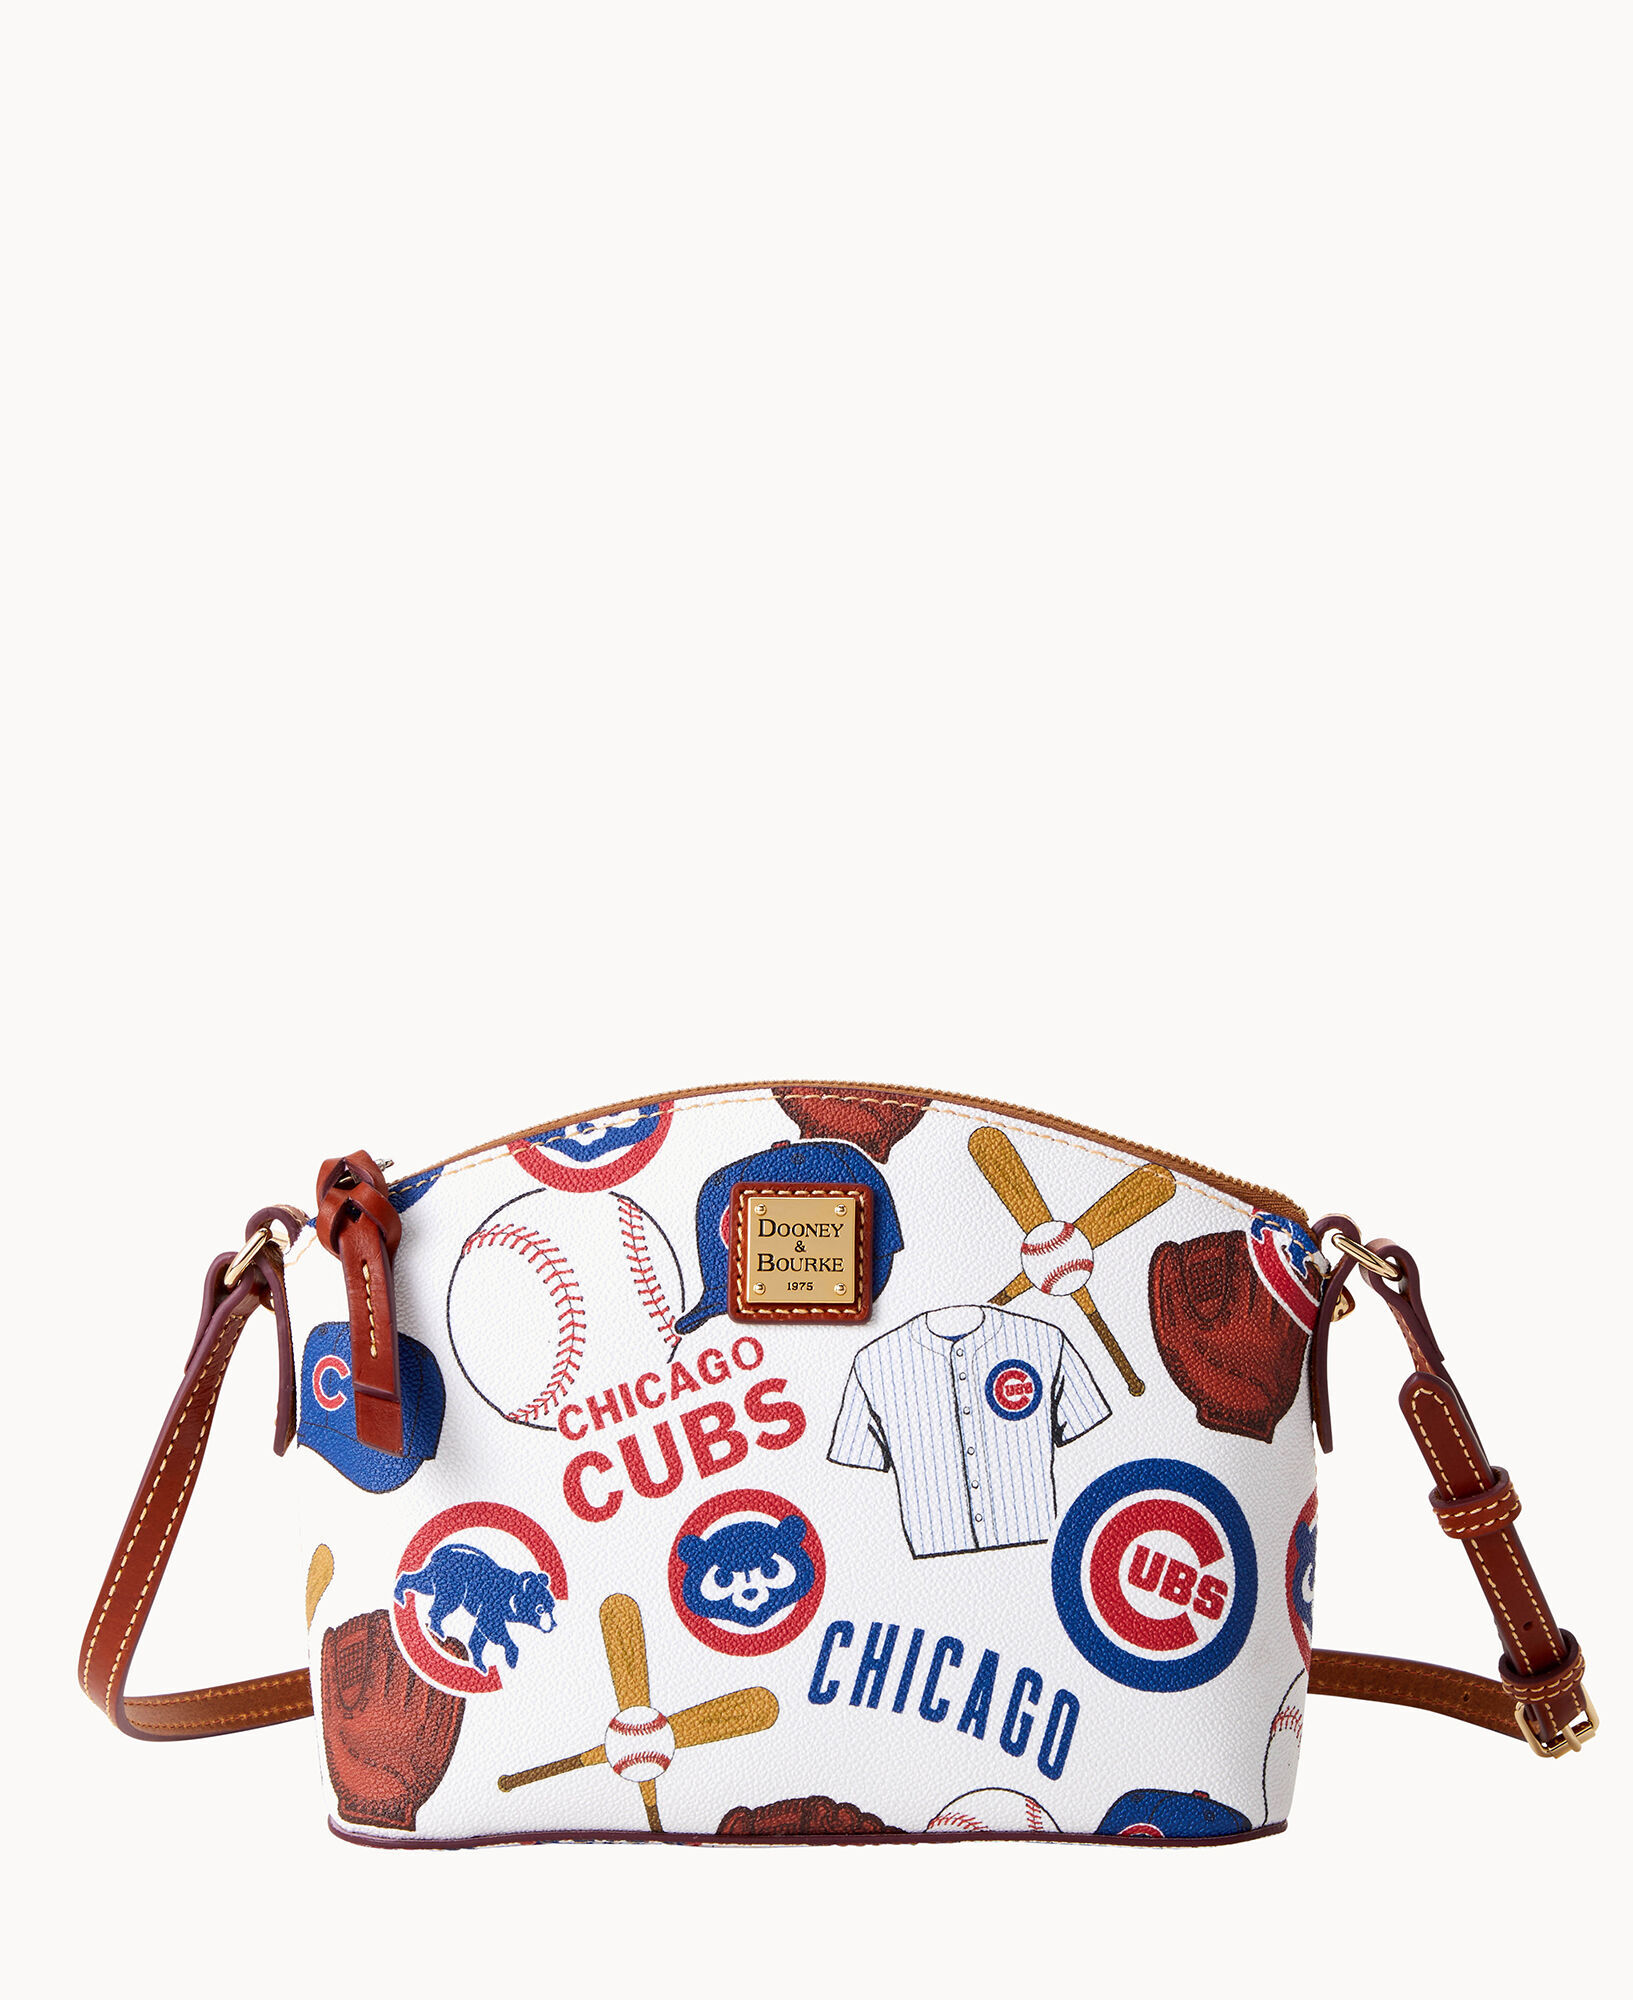 Dooney & Bourke Chicago Cubs Signature Shopper Purse